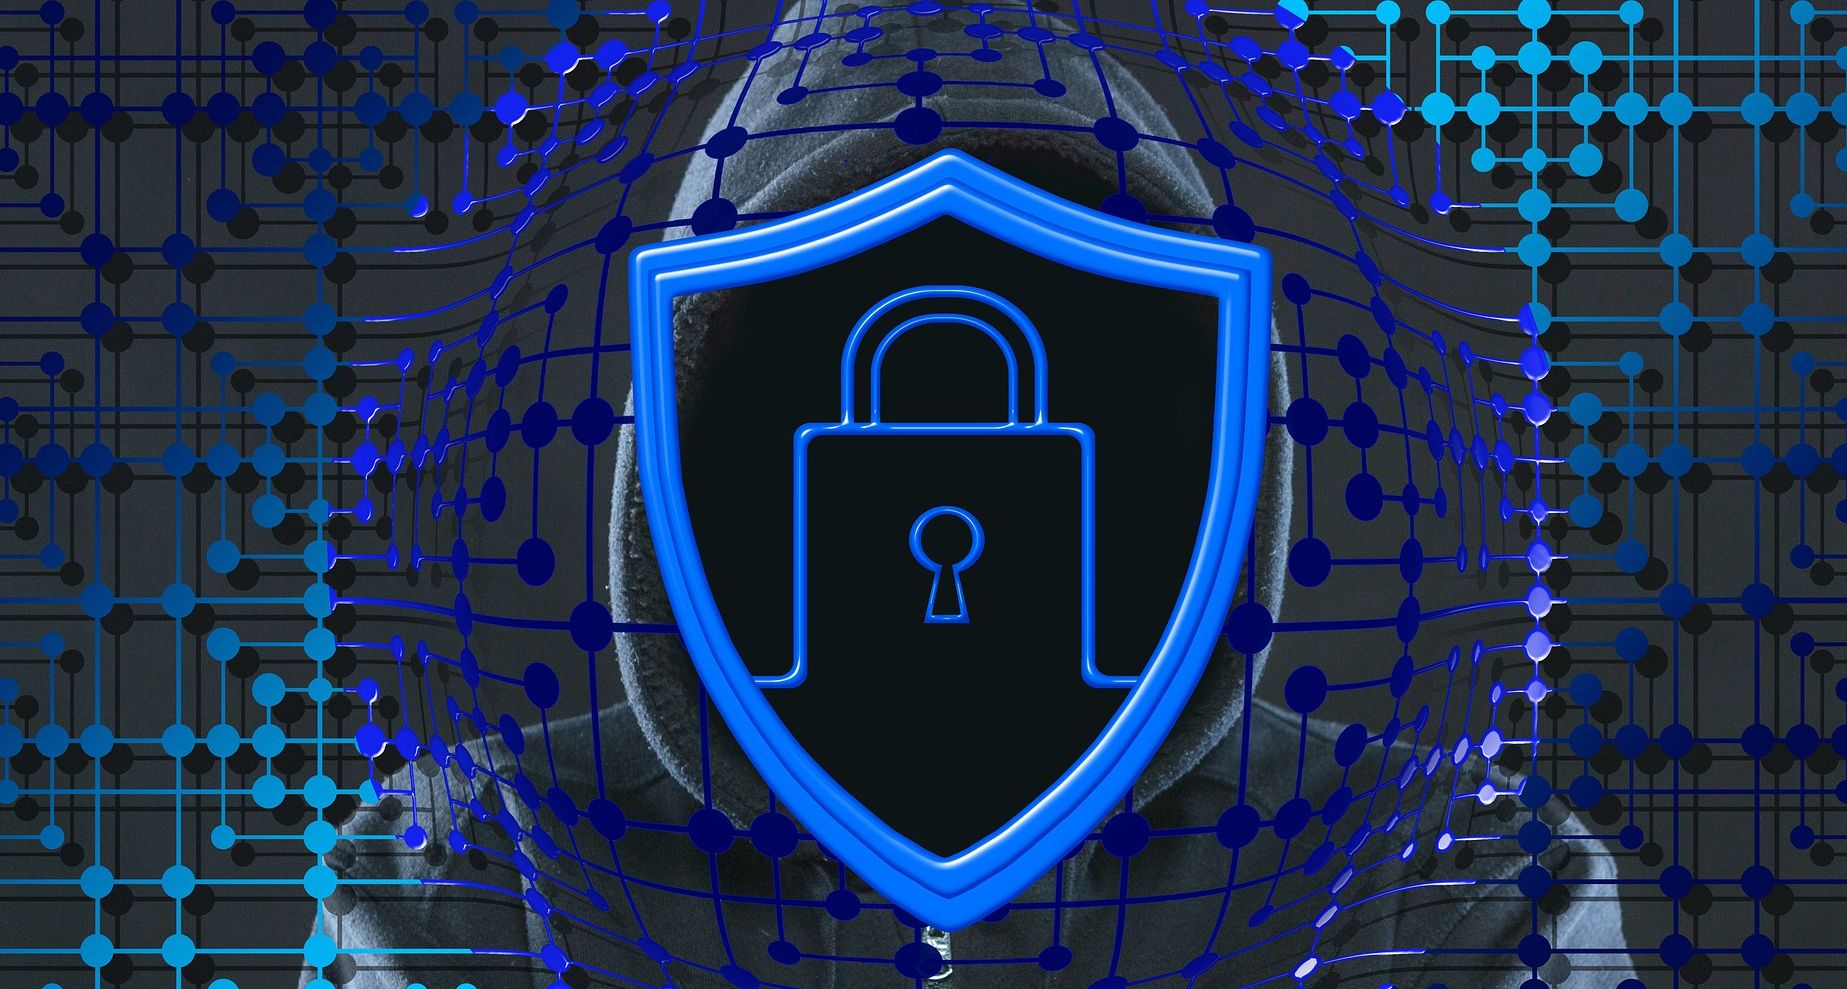 hooded figure behind blue lock symbol